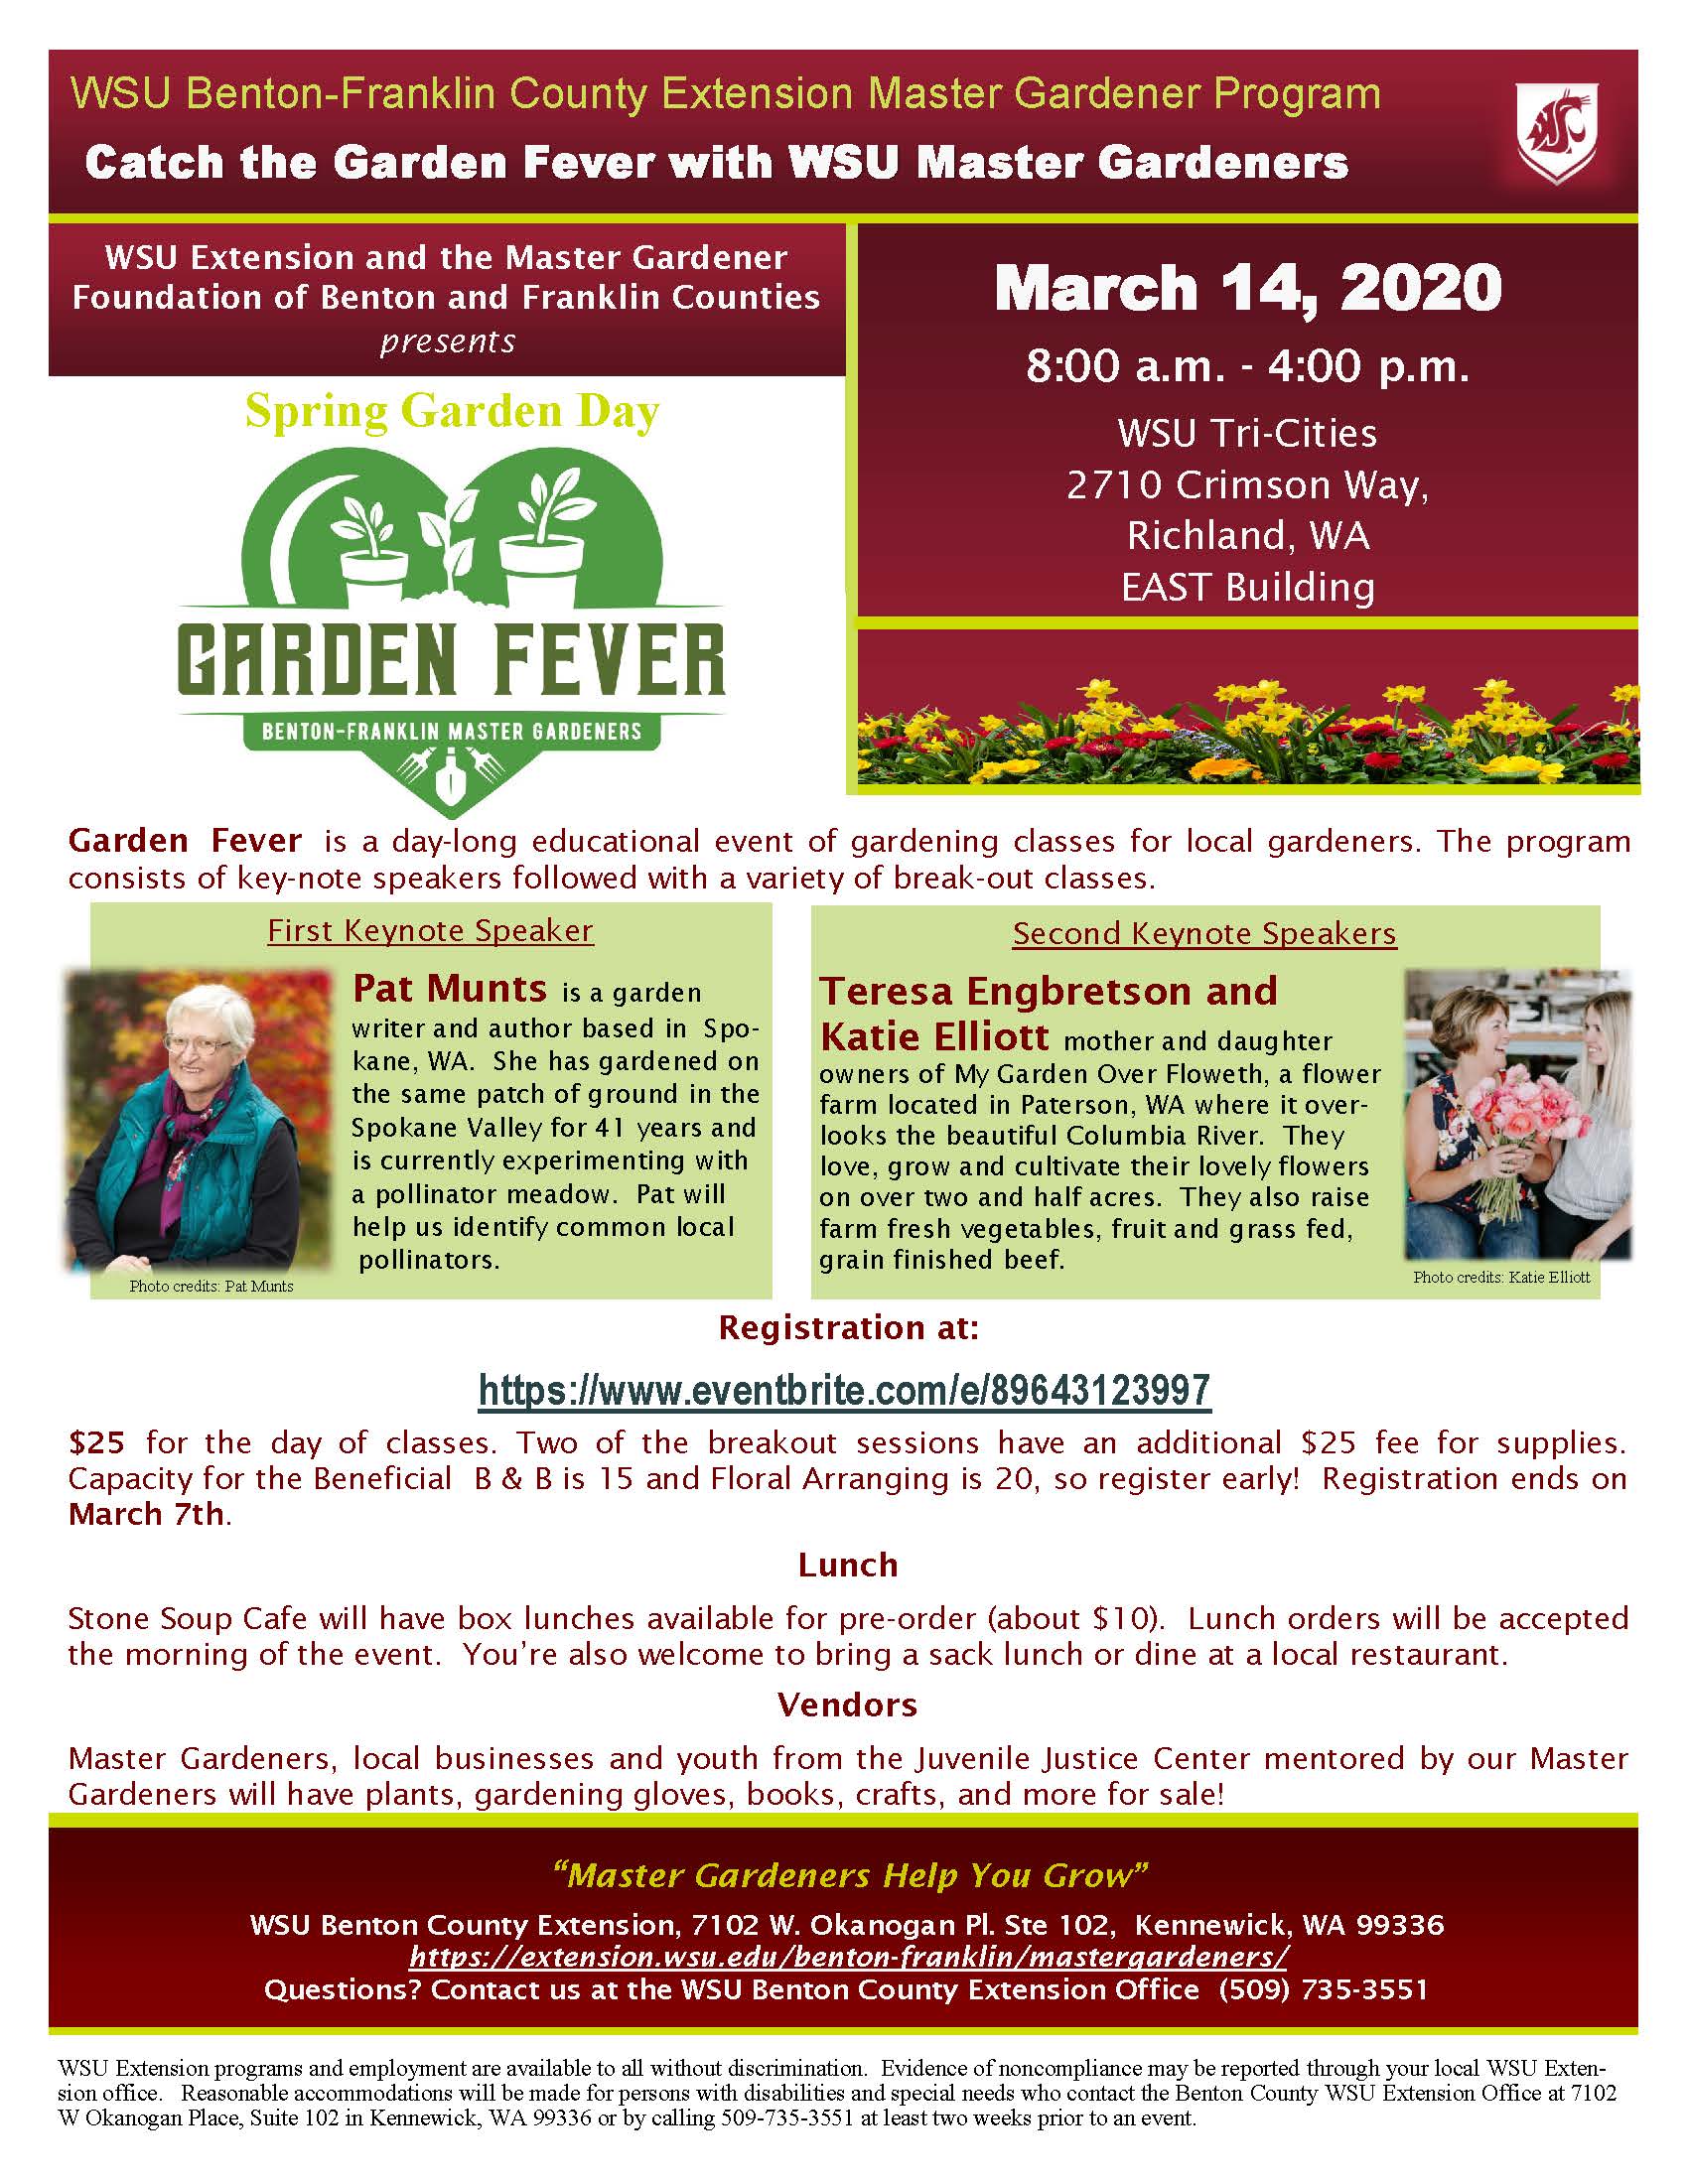 Wsu Master Gardeners Garden Fever All Day Educational Event